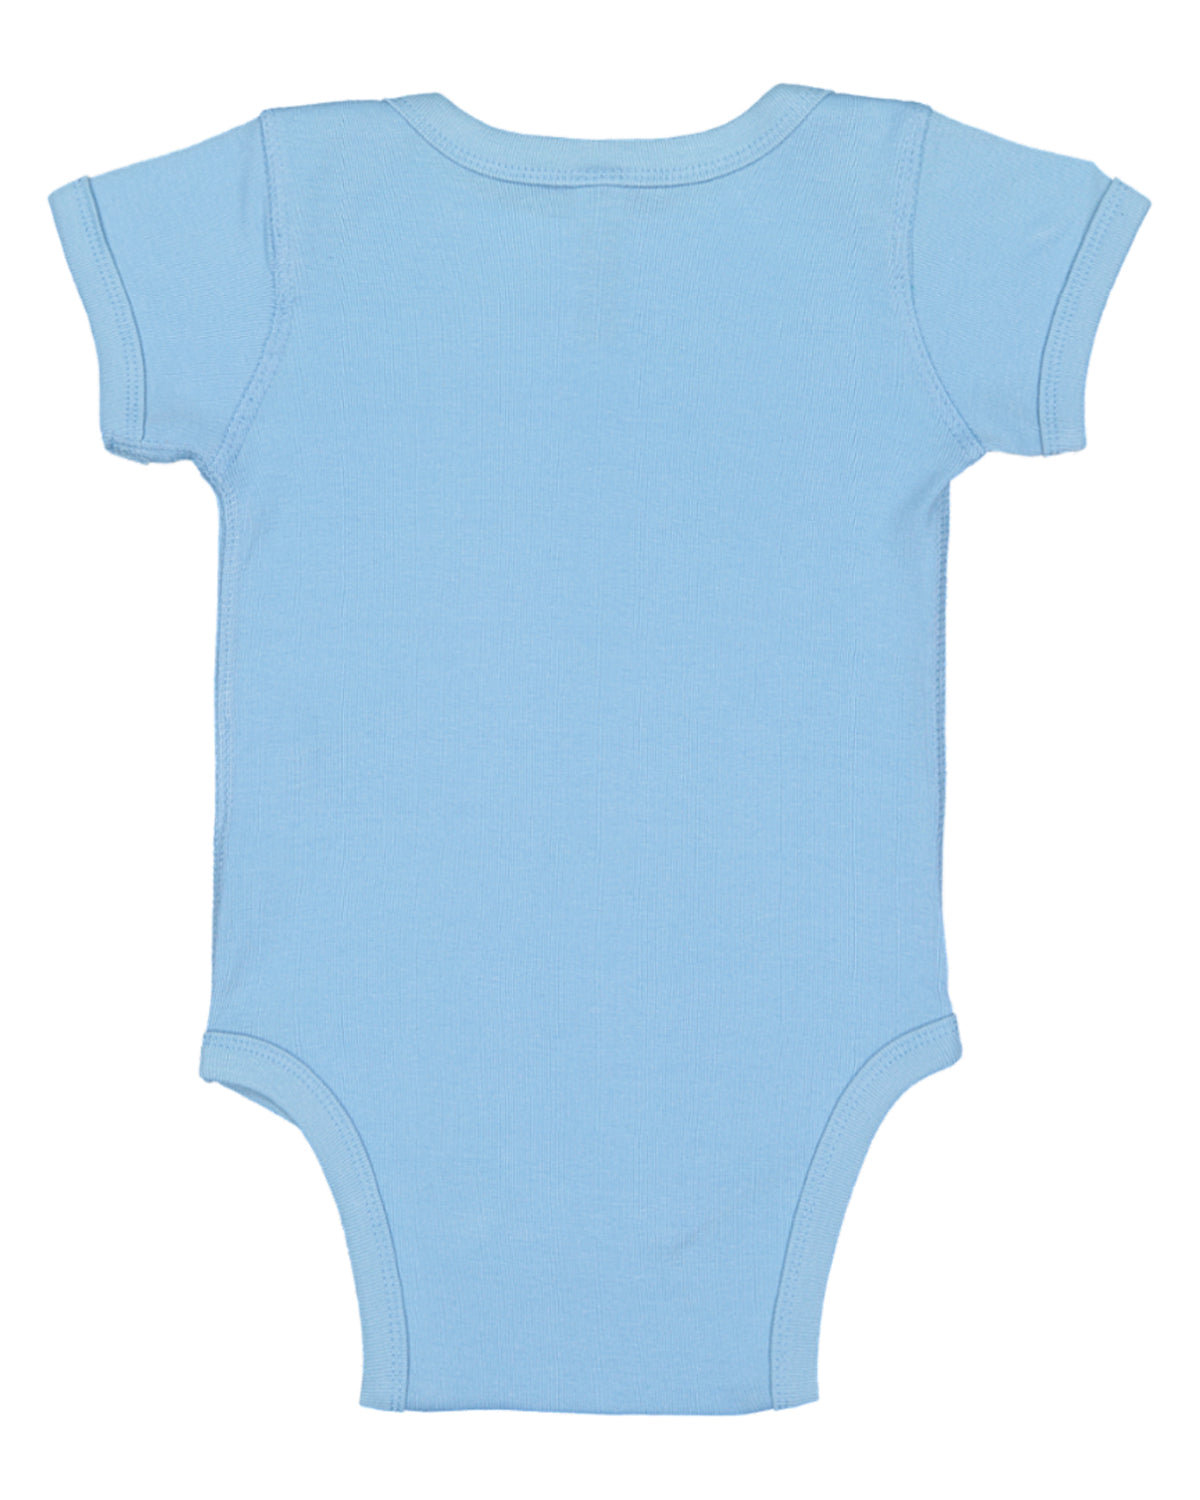 Short Sleeve -- Baby Bodysuit / Onesie -- 100% Cotton -- Light Blue